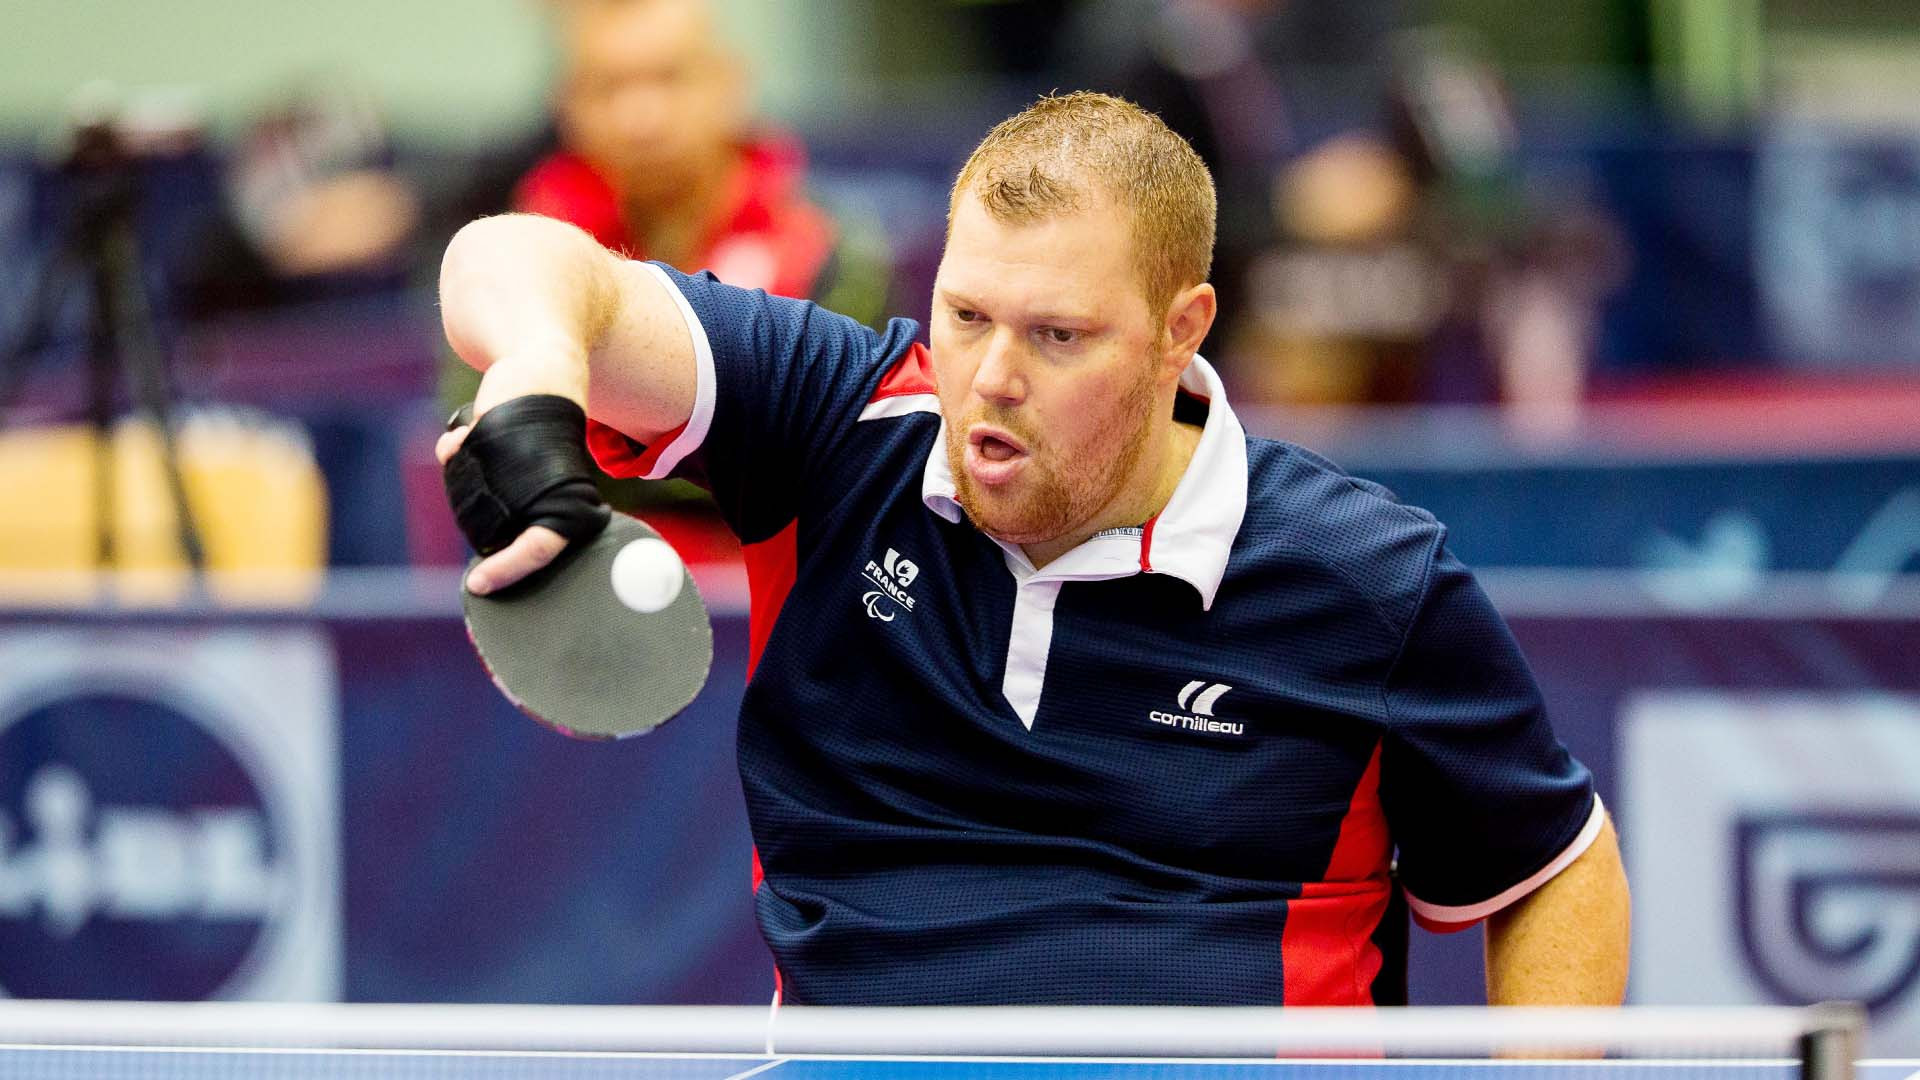 Defending champions edge into next round at European Para Table Tennis Championships